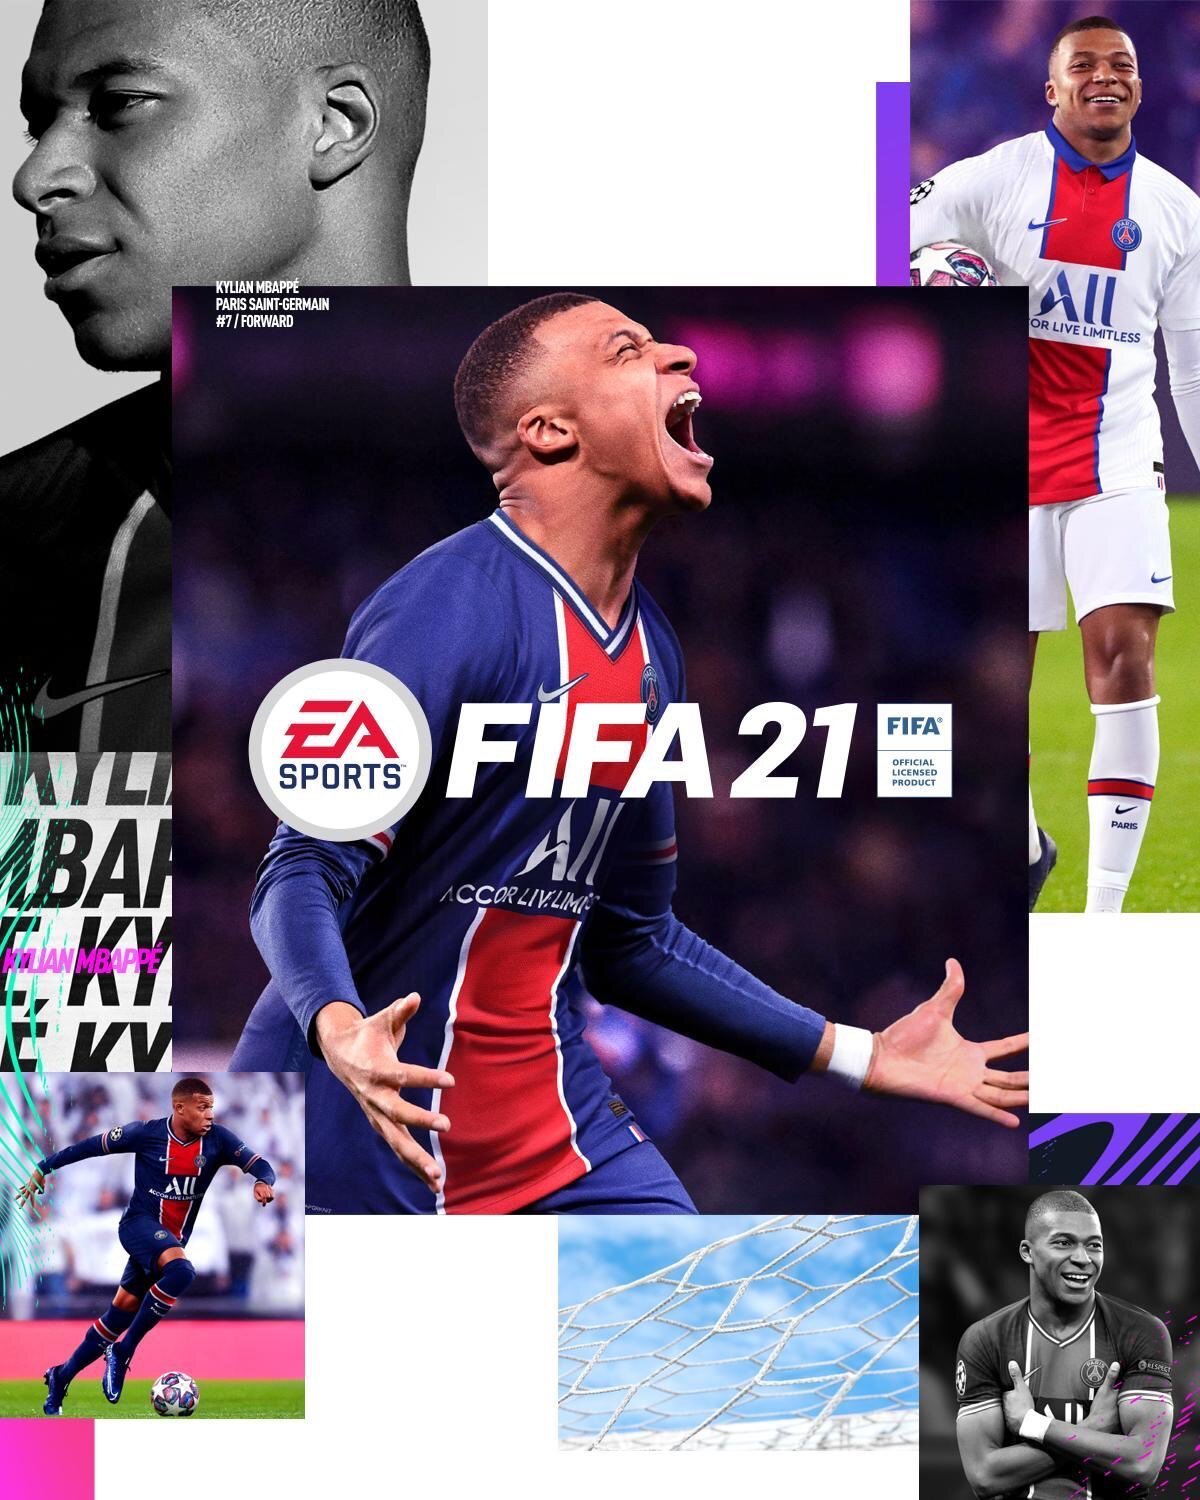 jaquette du jeu vidéo FIFA 21